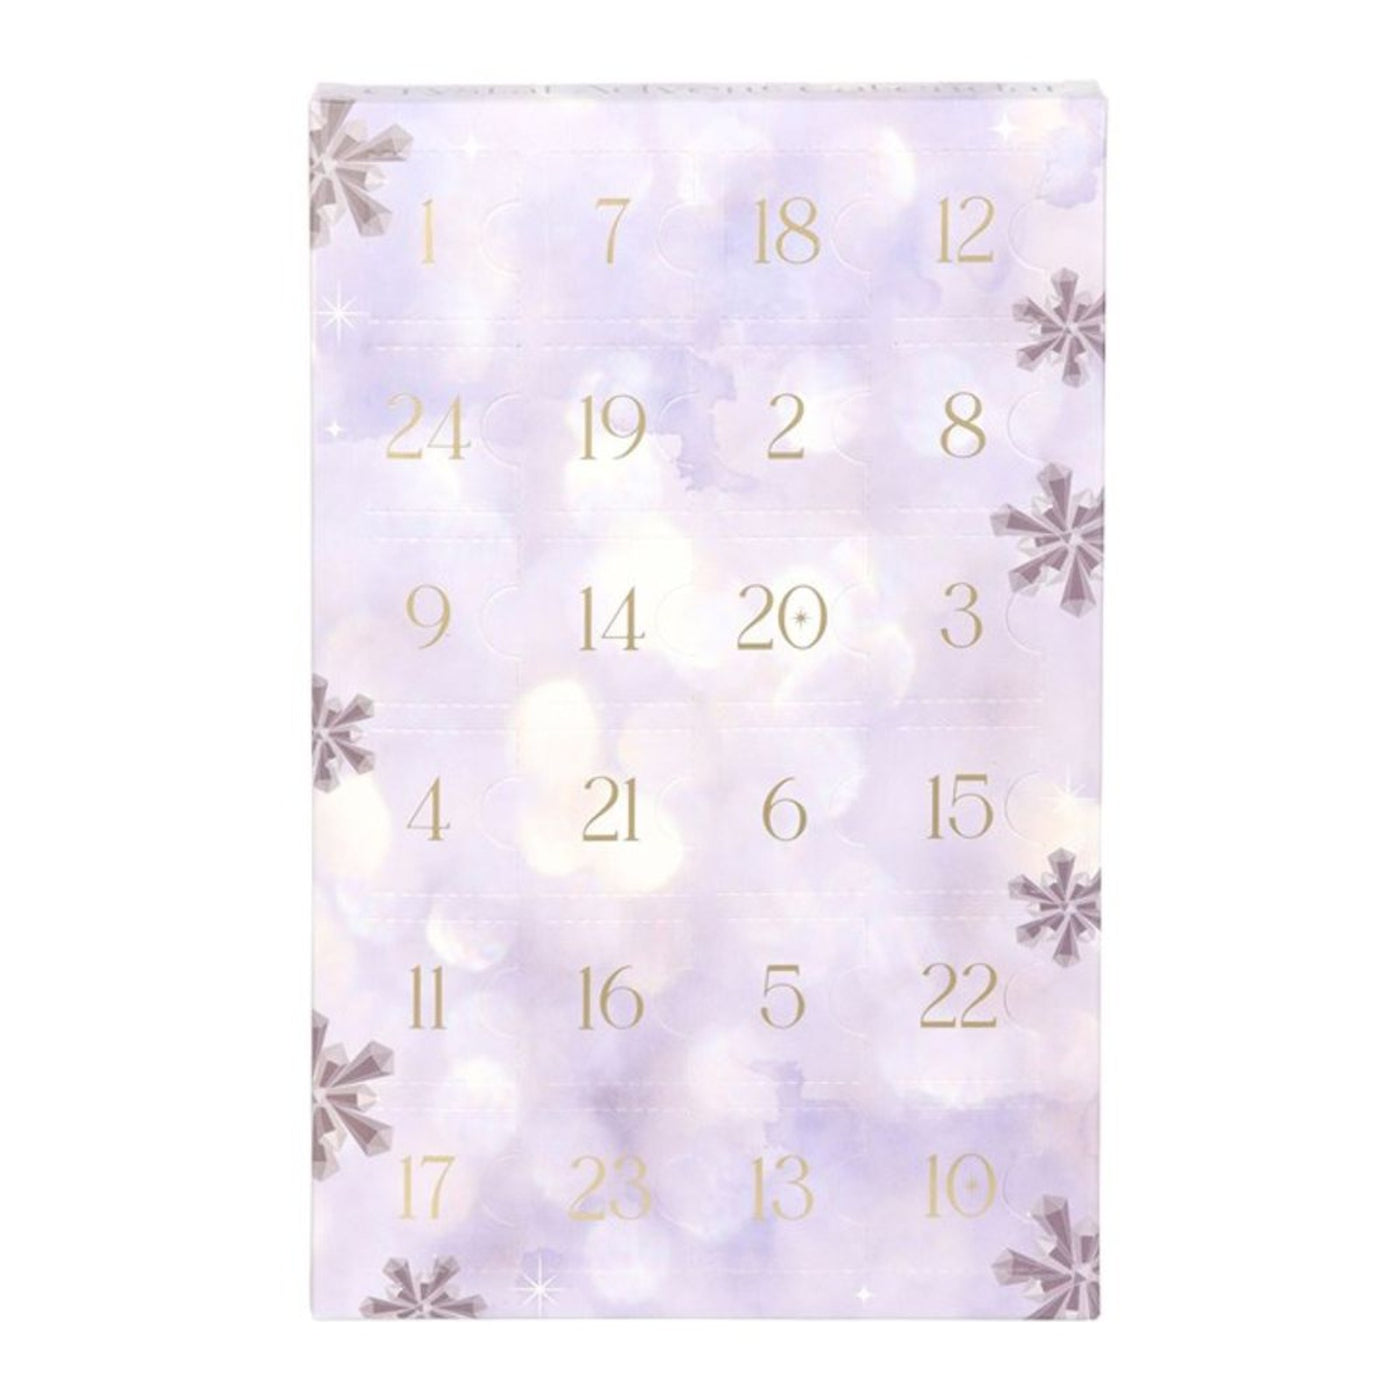 24 Gemstone Crystal Christmas Advent Calendar In Gift Box.